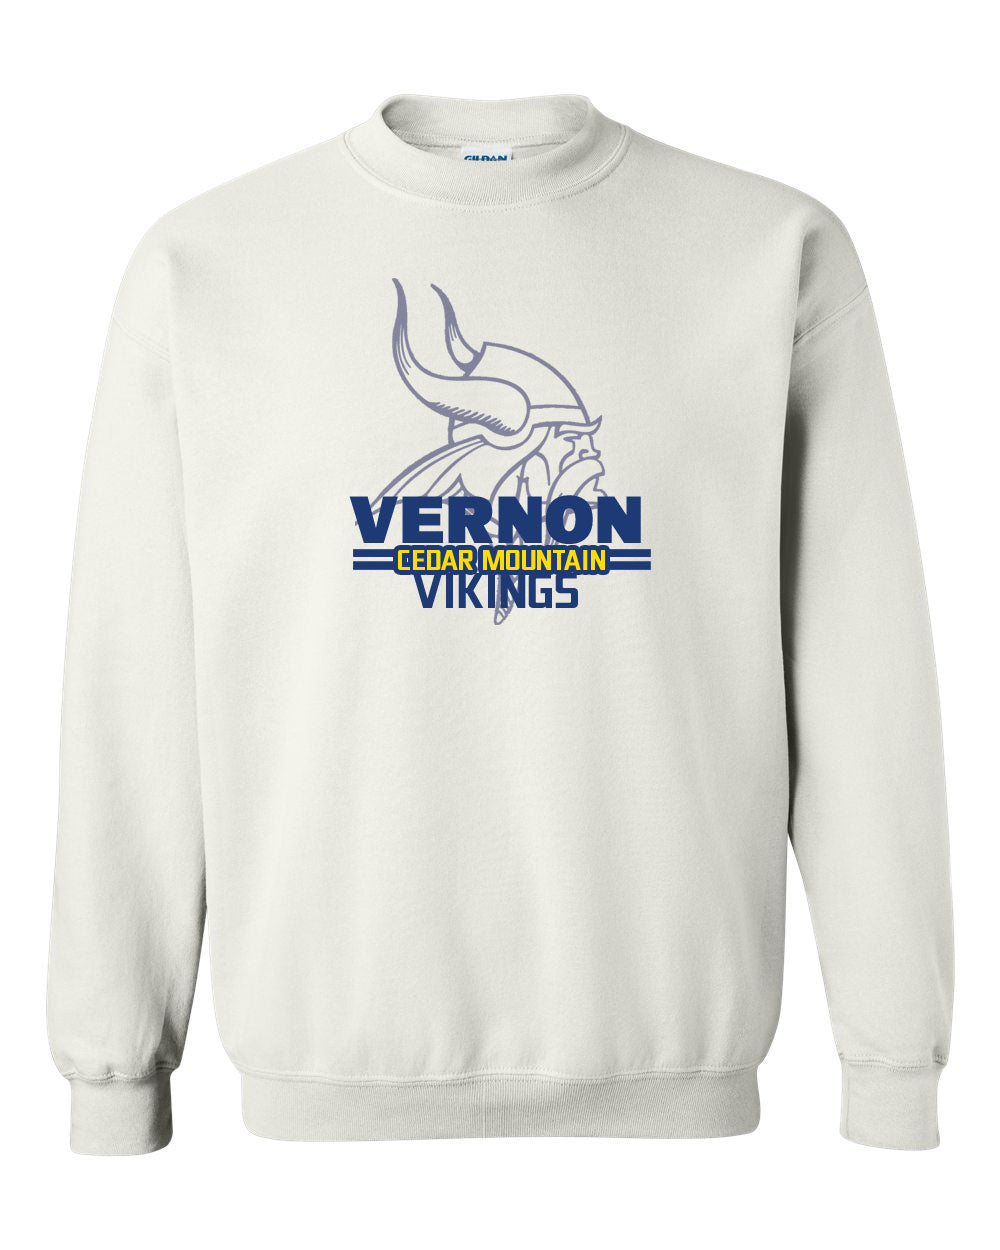 Vernon design 9 non hooded sweatshirt